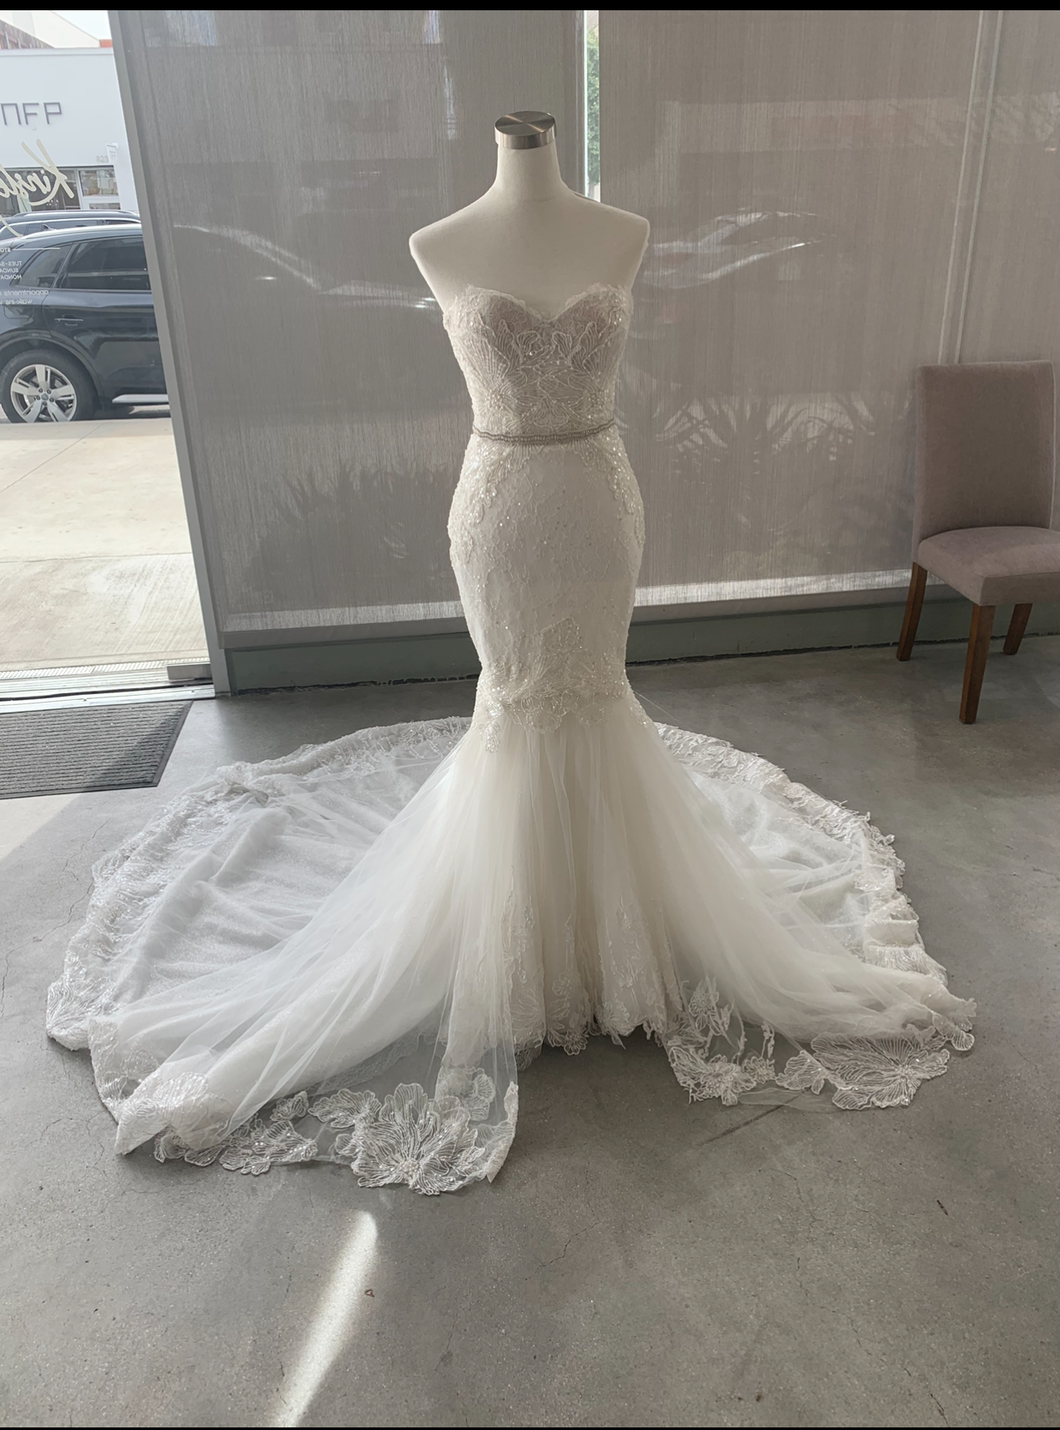 NettaBenShabu 'Custom' size 4 used wedding dress front view on mannequin